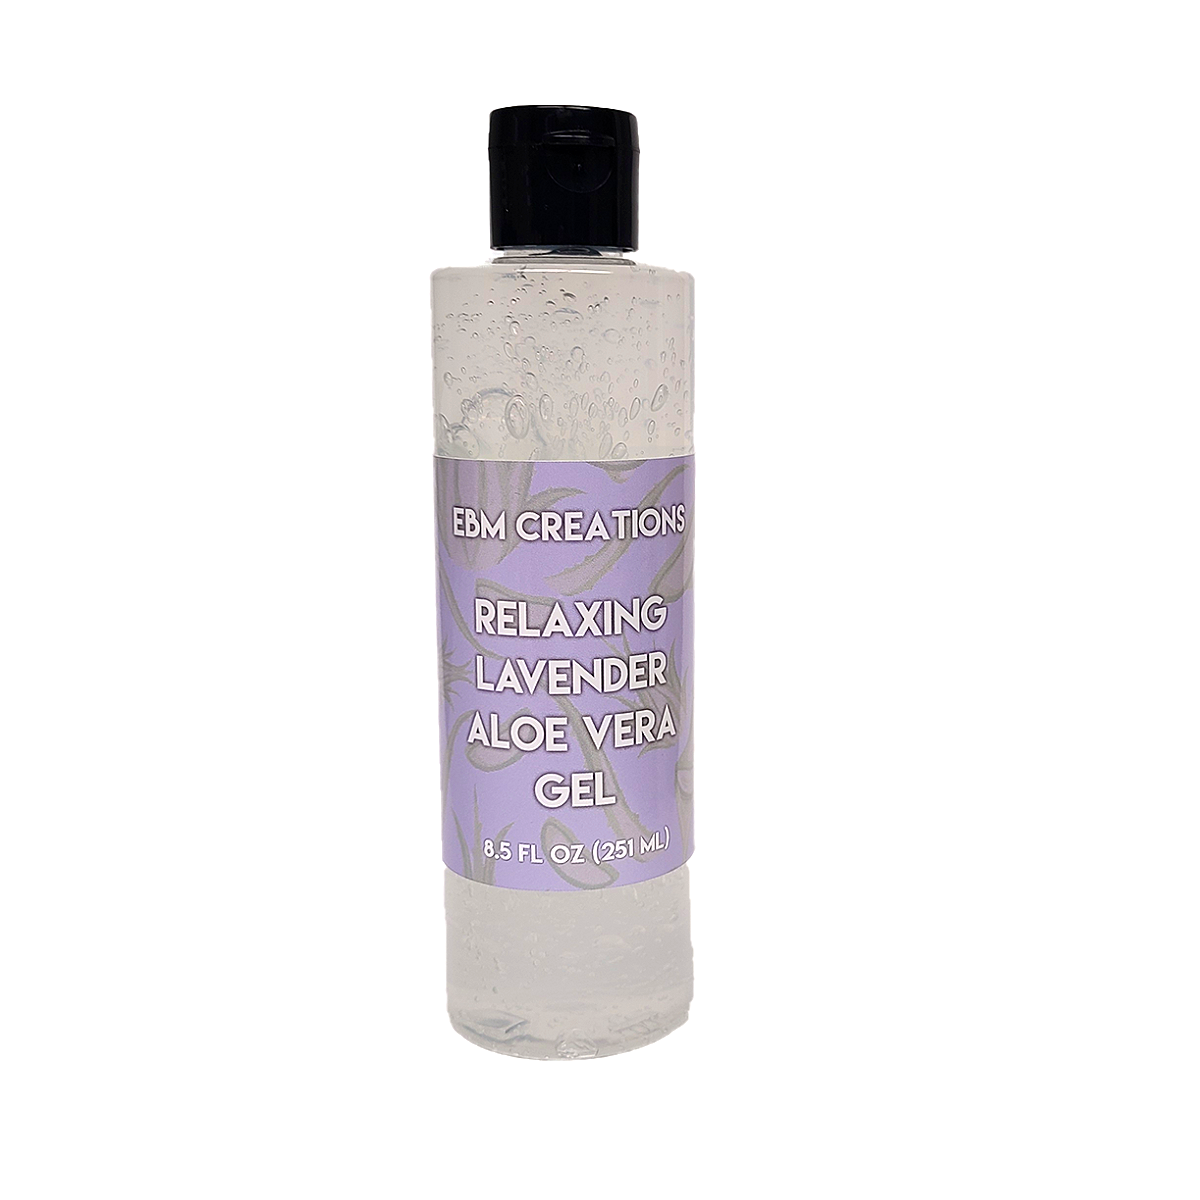 Relaxing Lavender Aloe Vera Gel - 8.5oz Bottle